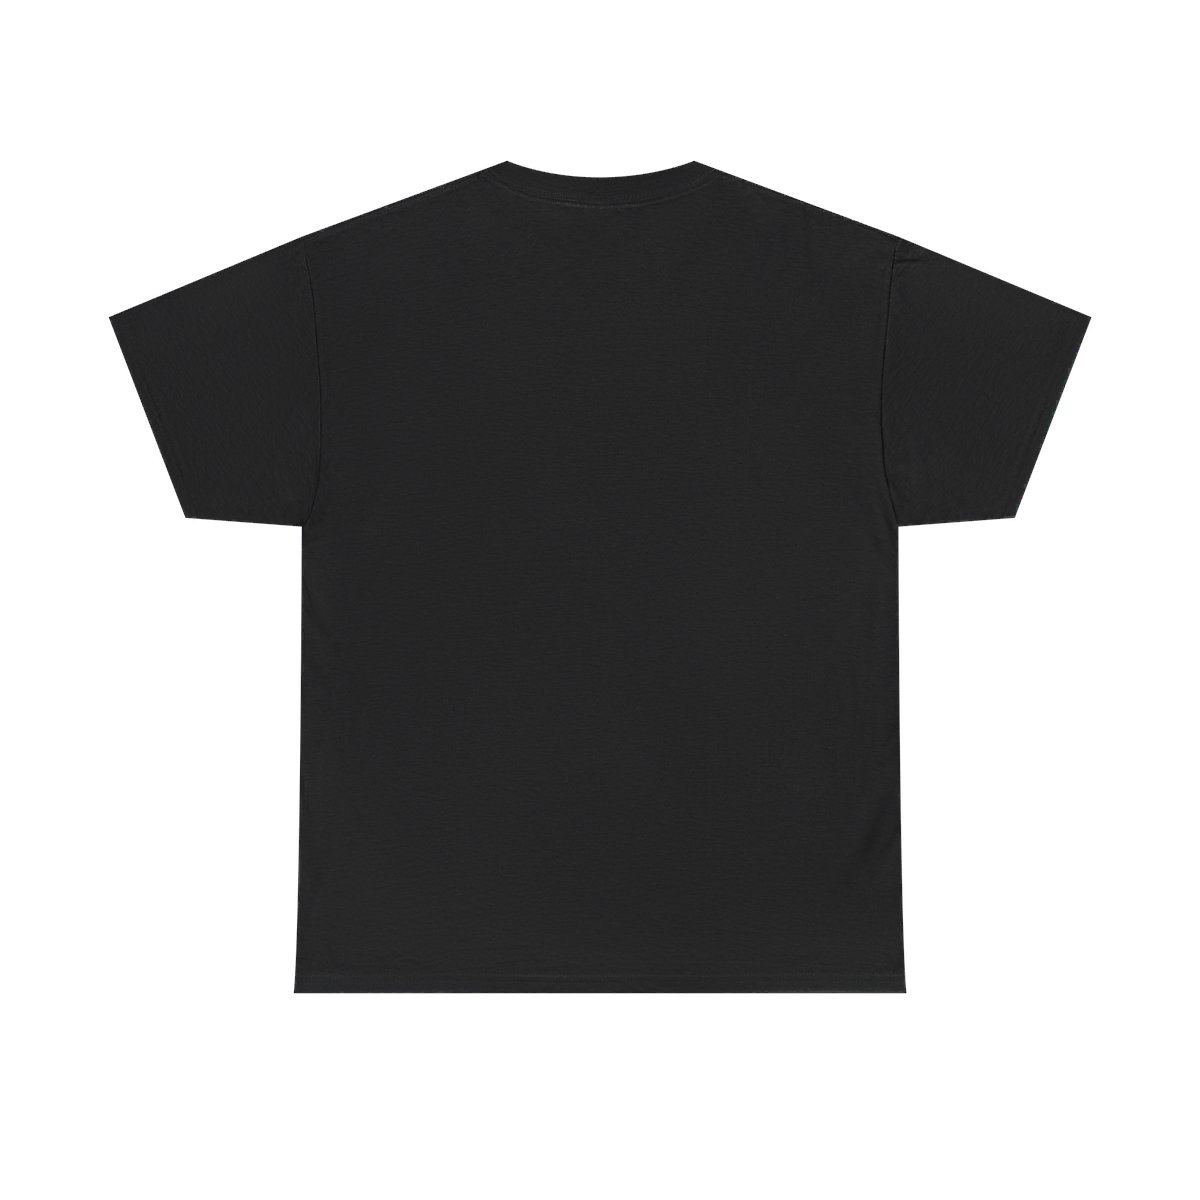 Pantokrator – Incarnate (Hand) Short Sleeve Tshirt